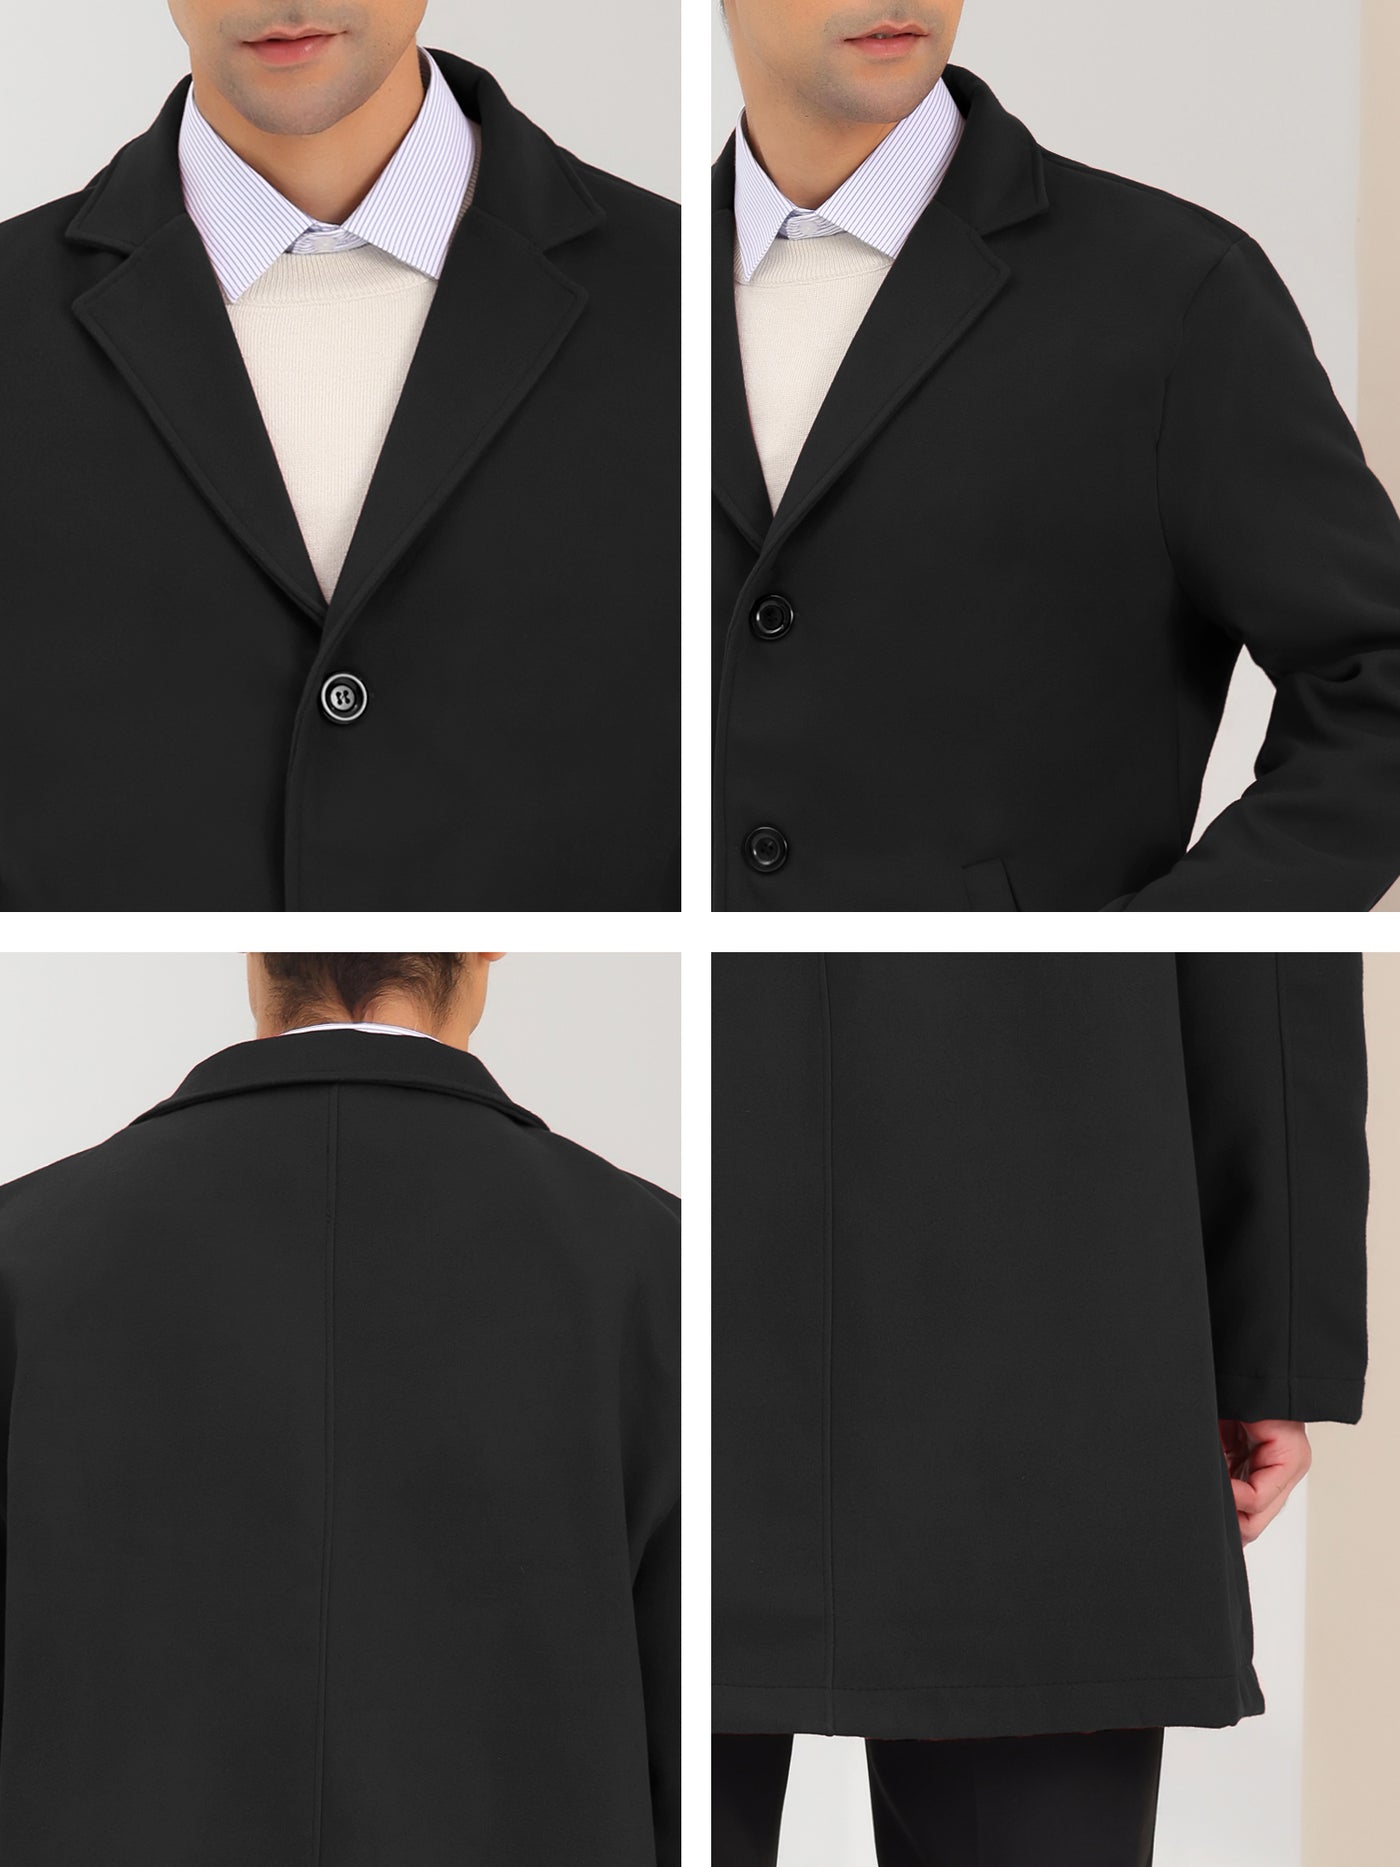 Bublédon Men's Trench Coat Lapel Collar Single Breasted Warm Long Peacoat Overcoat